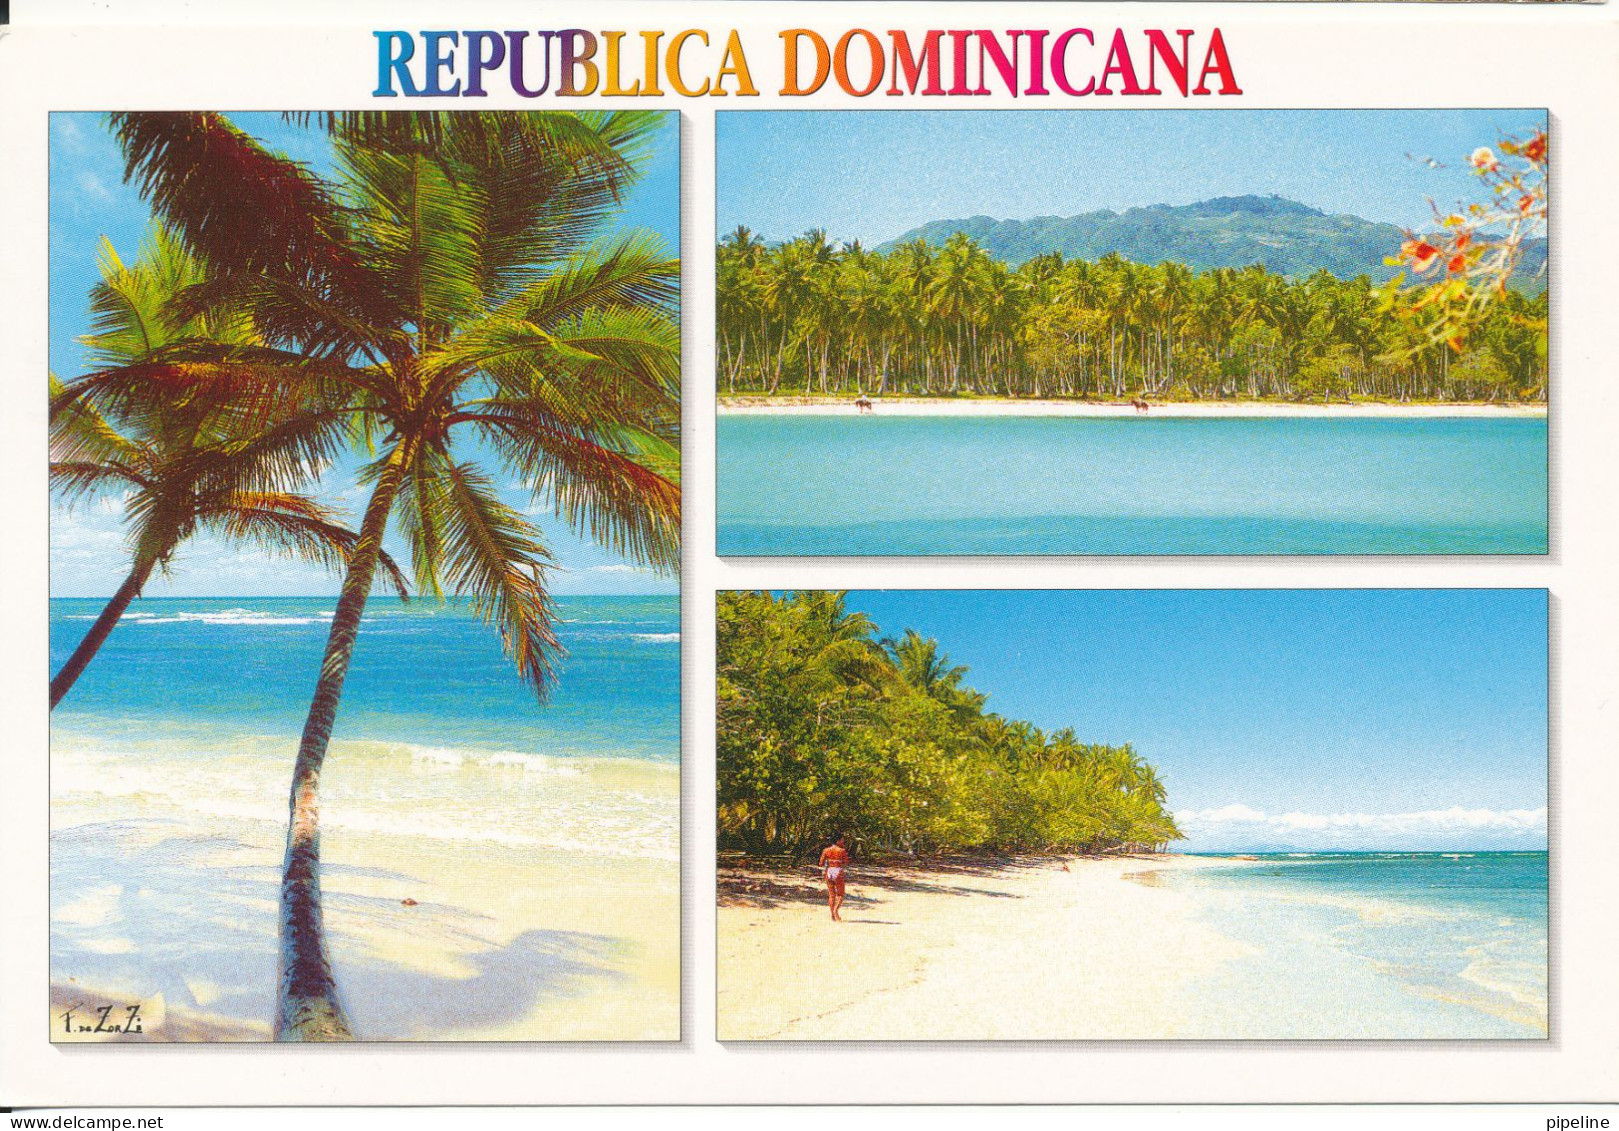 Dominicana Postcard Sent To Germany 23-6-2004 Coista Norte - Dominicaanse Republiek